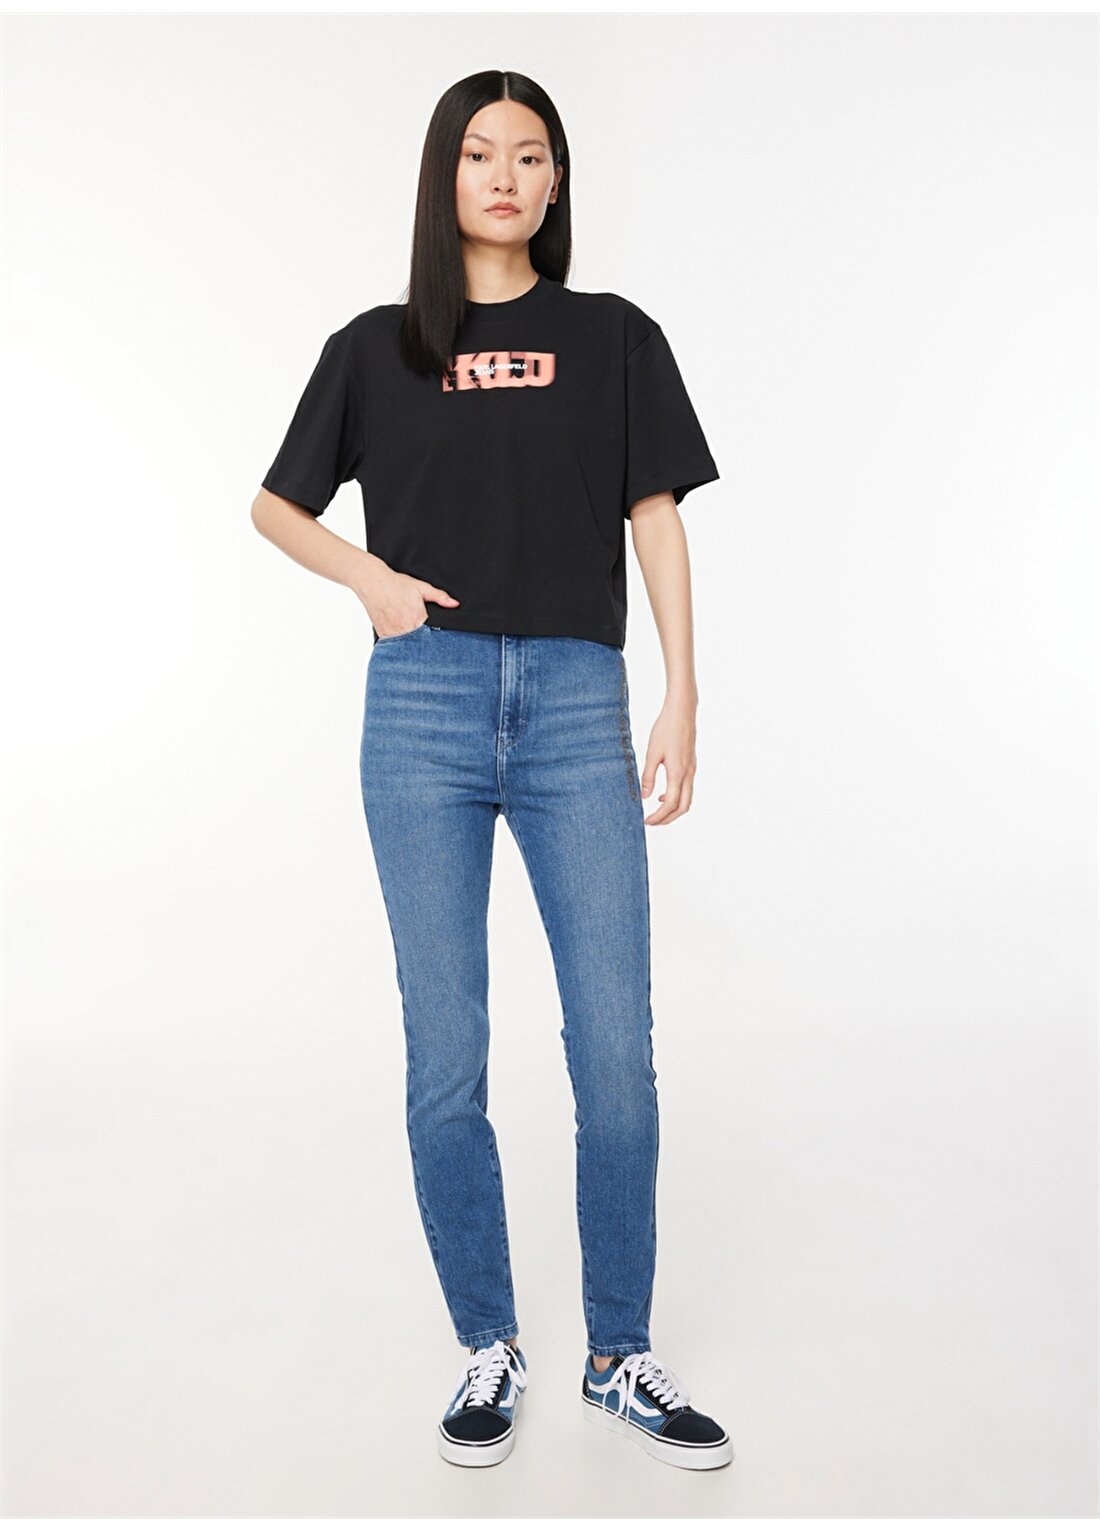 Karl Lagerfeld Jeans Bisiklet Yaka Baskılı Siyah Kadın T-Shirt 236J1702